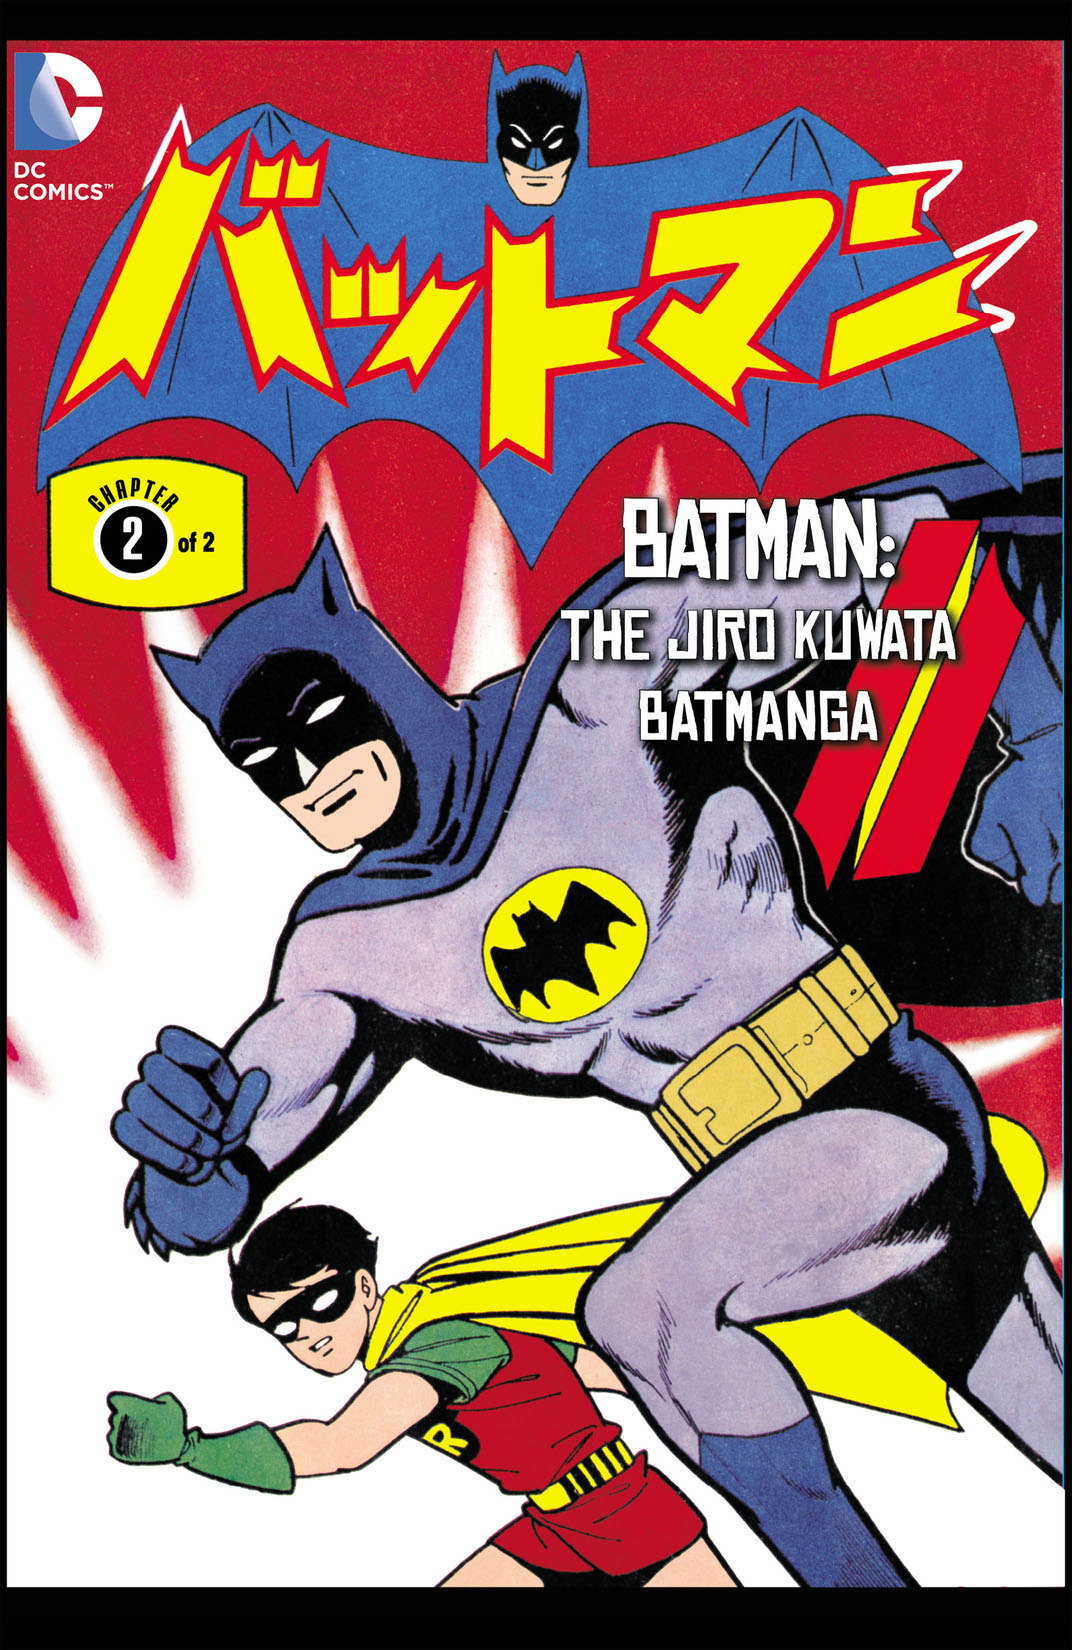 Batman: The Jiro Kuwata Batmanga #45 preview images